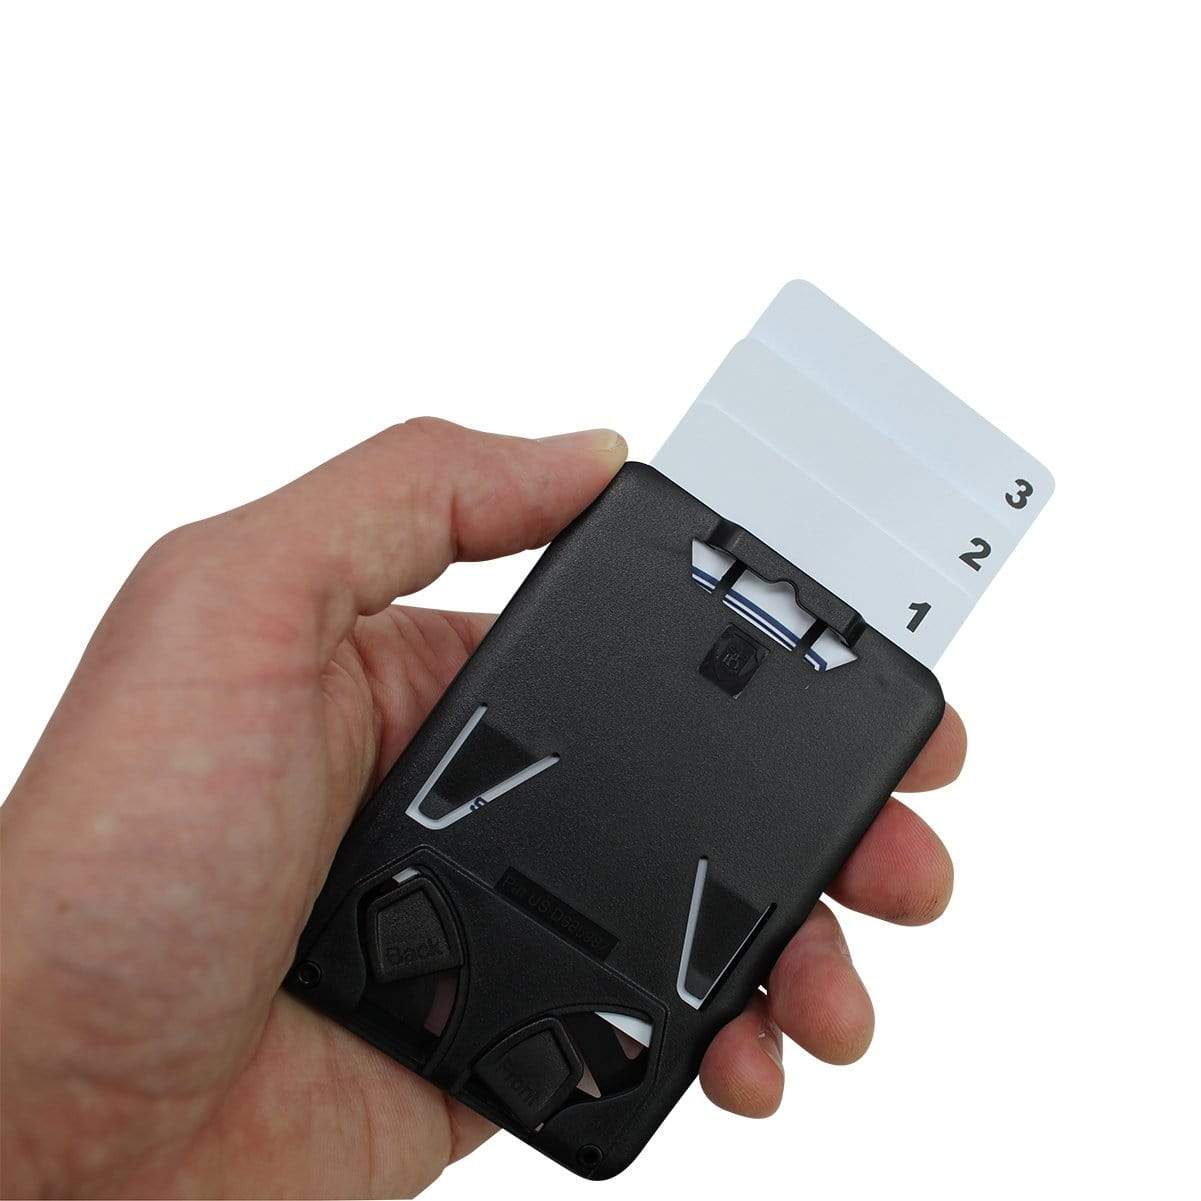 Fully-Compostable Rigid Multi-Card Badge Holder